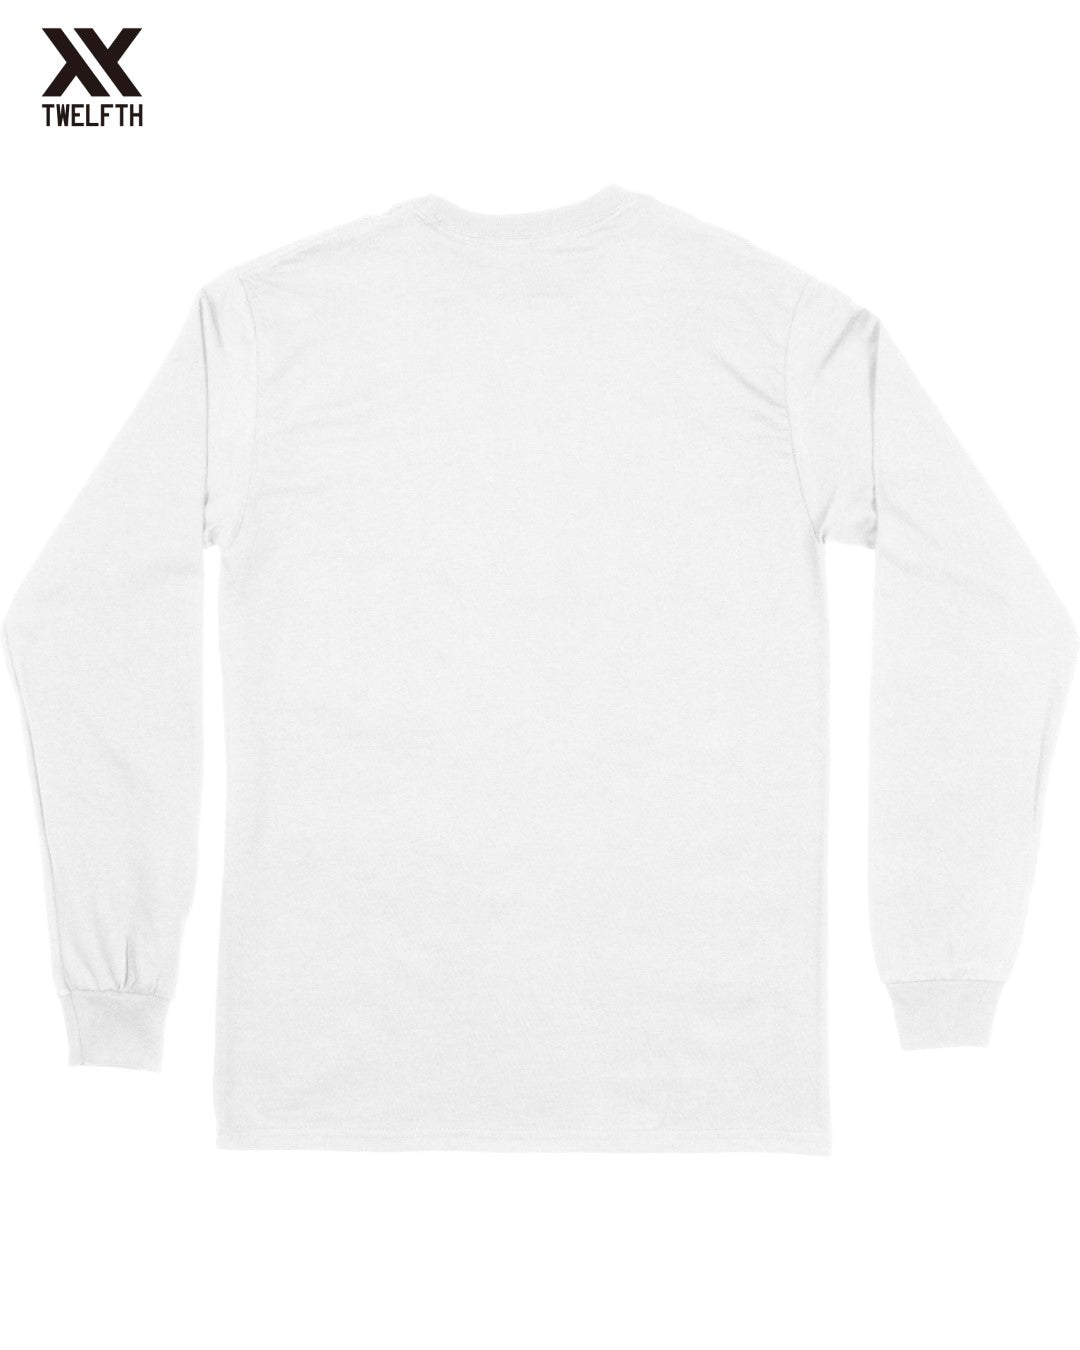 France Crest T-Shirt - Mens - Long Sleeve